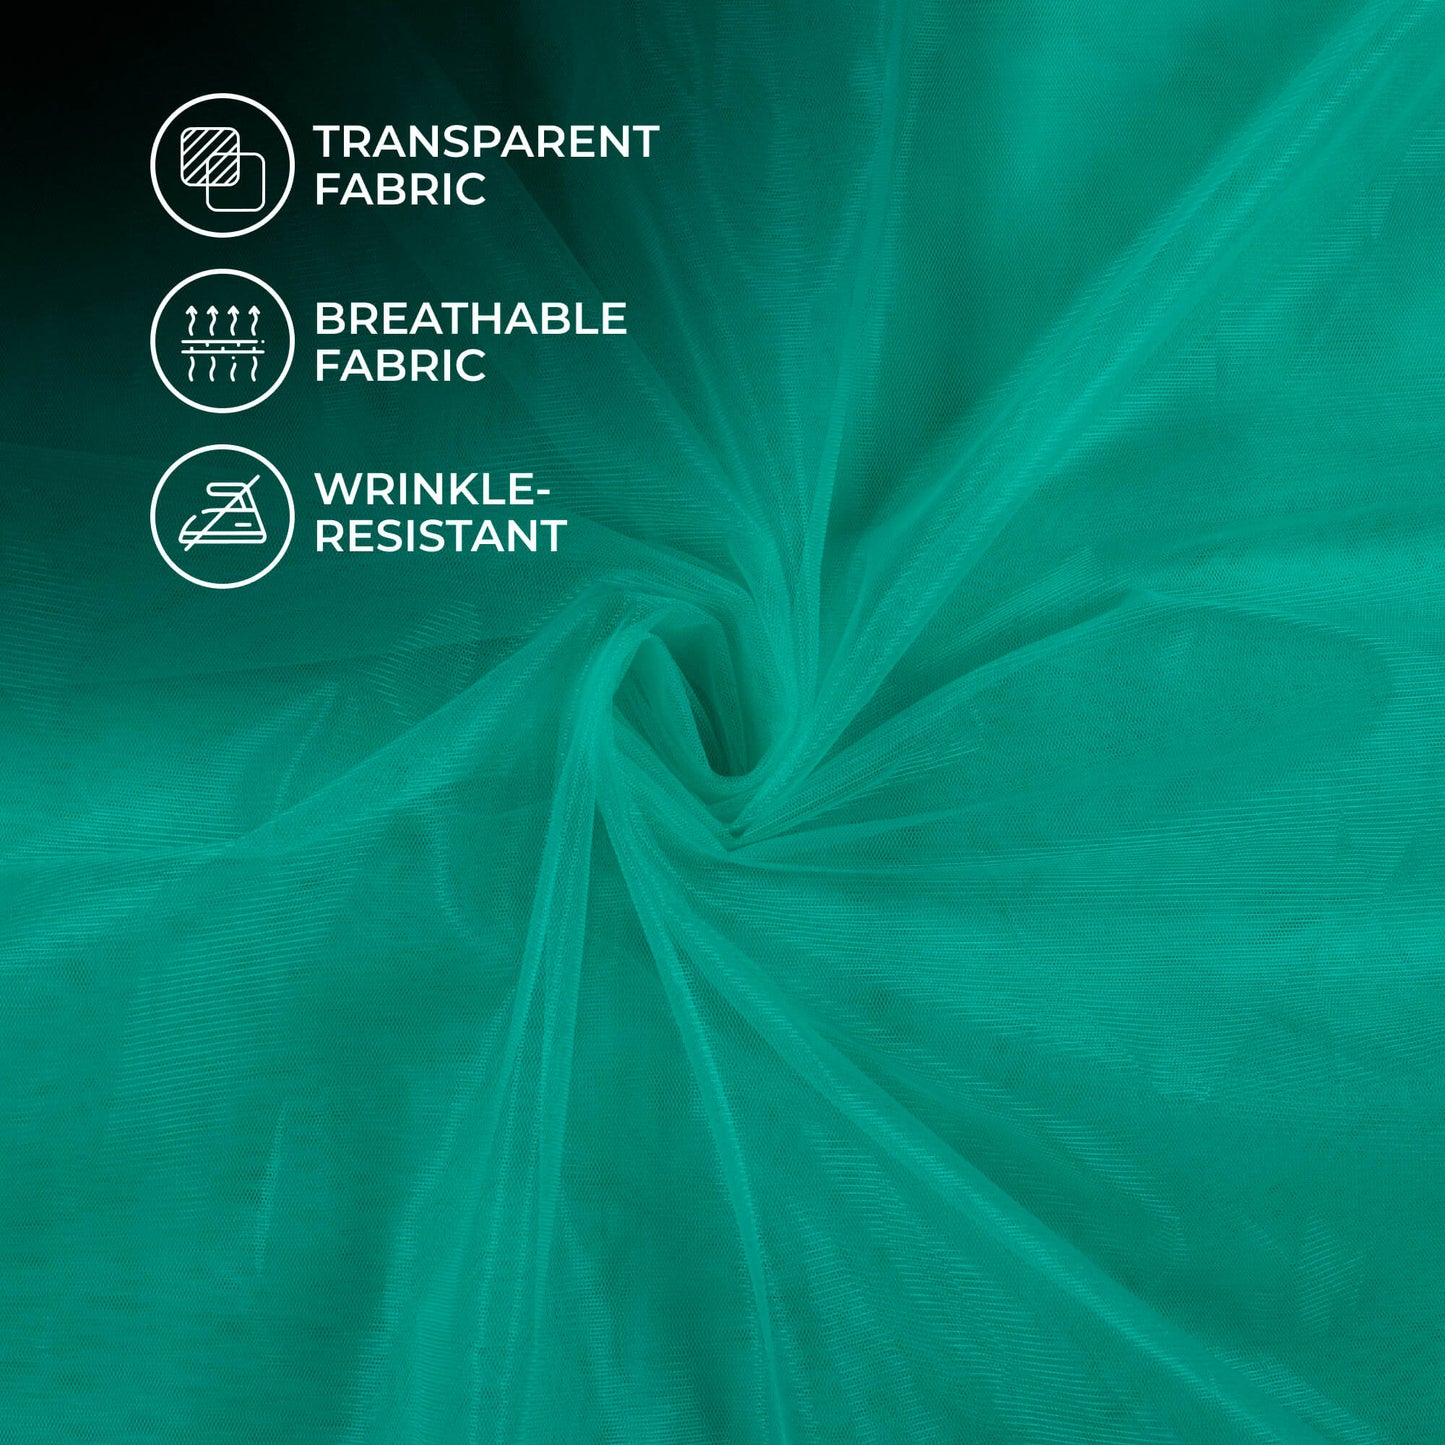 Aqua Green Plain Premium Quality Butterfly Net Fabric